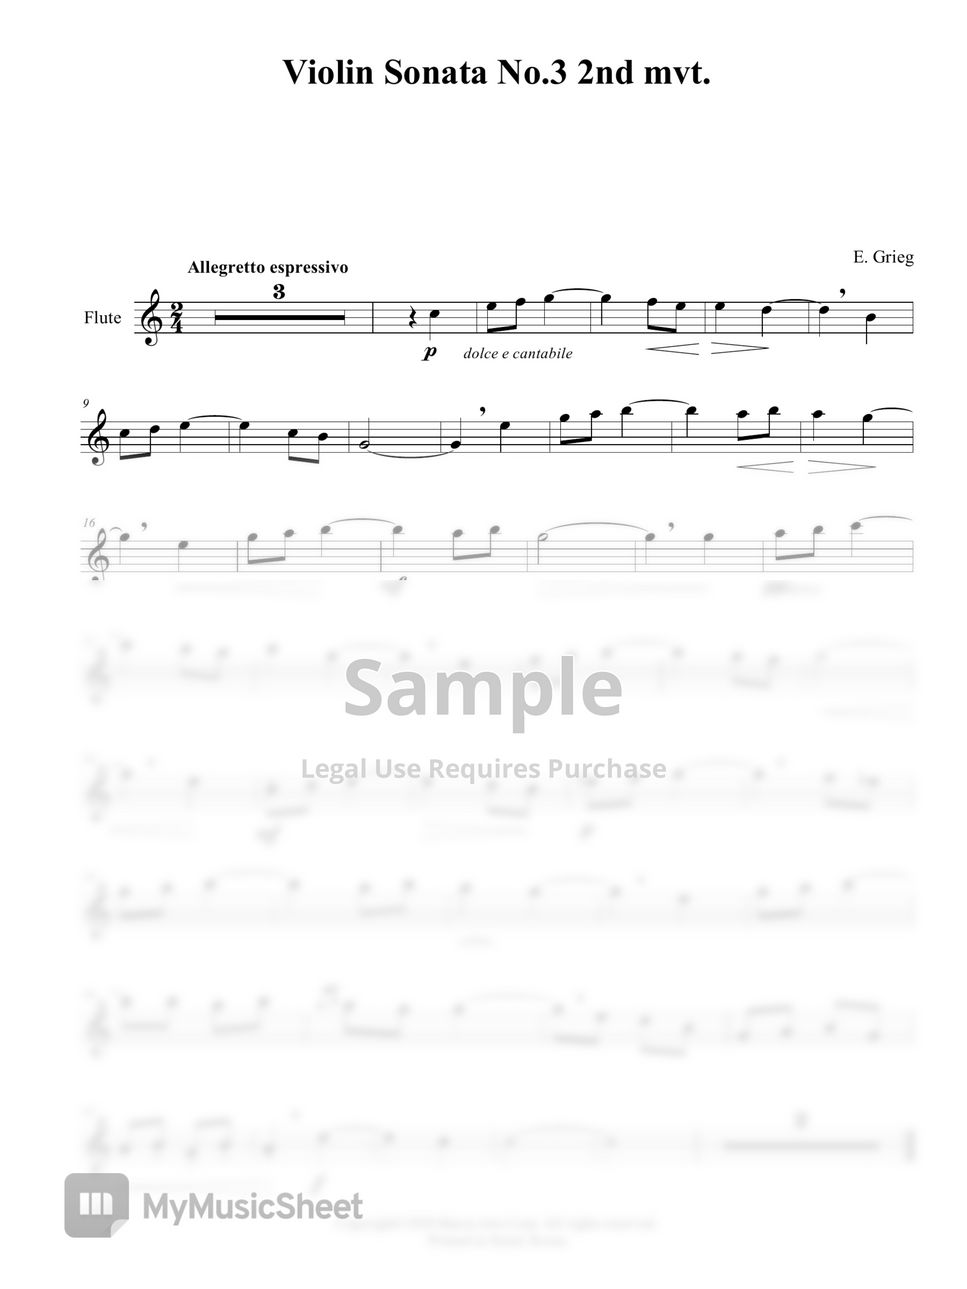 E. Grieg - Violin Sonata Op.45 2nd mvt. (Flute Solo, Piano) (플룻 솔로) by 바론아트